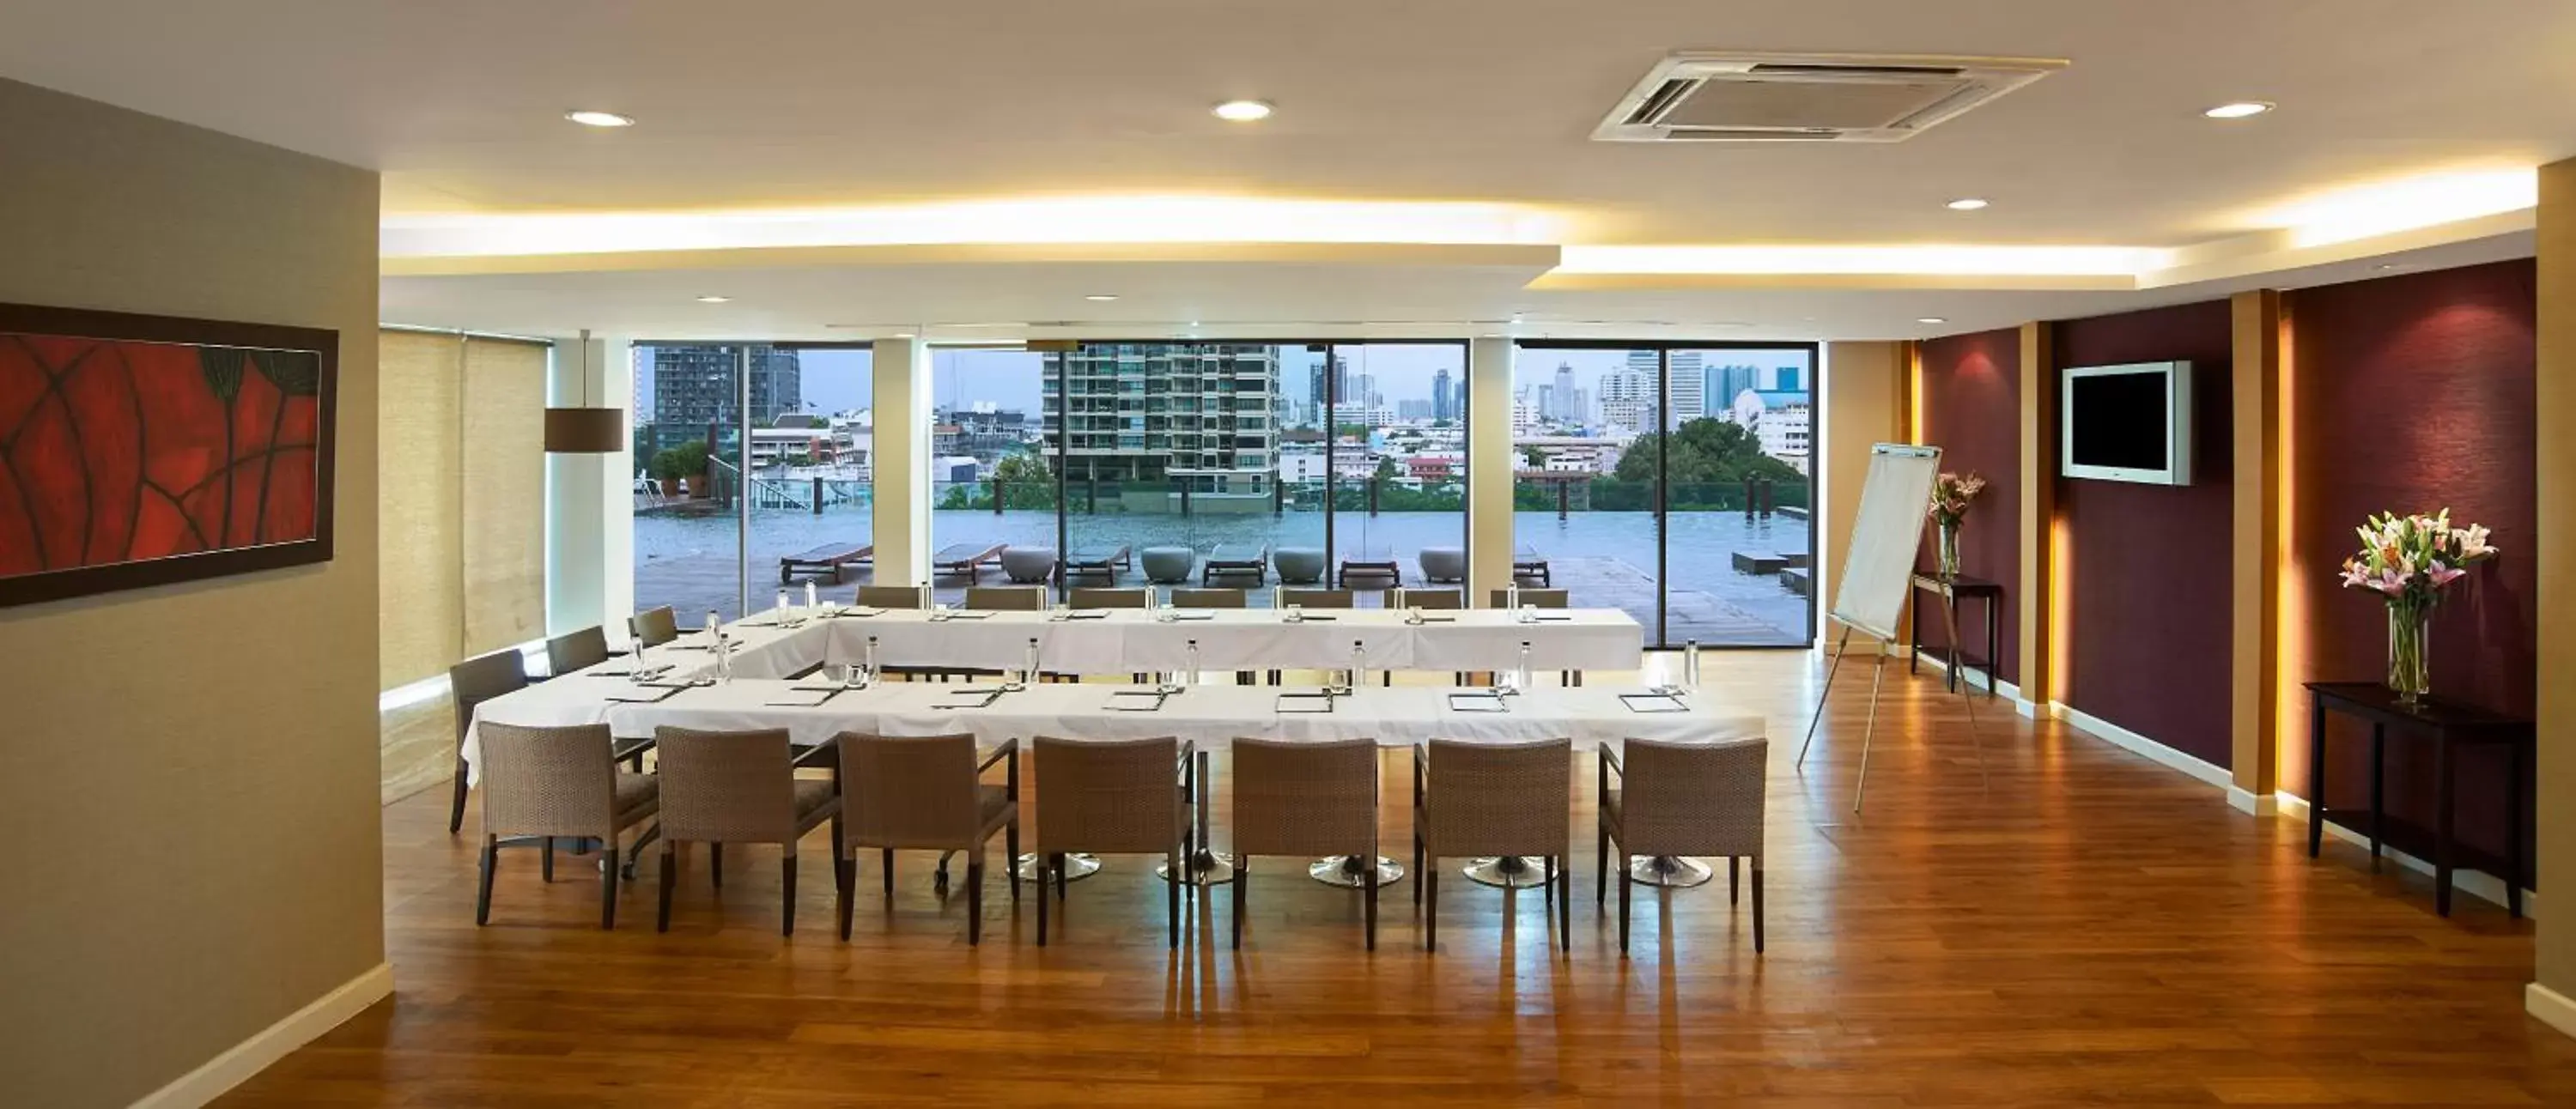 Meeting/conference room in Urbana Sathorn Hotel, Bangkok